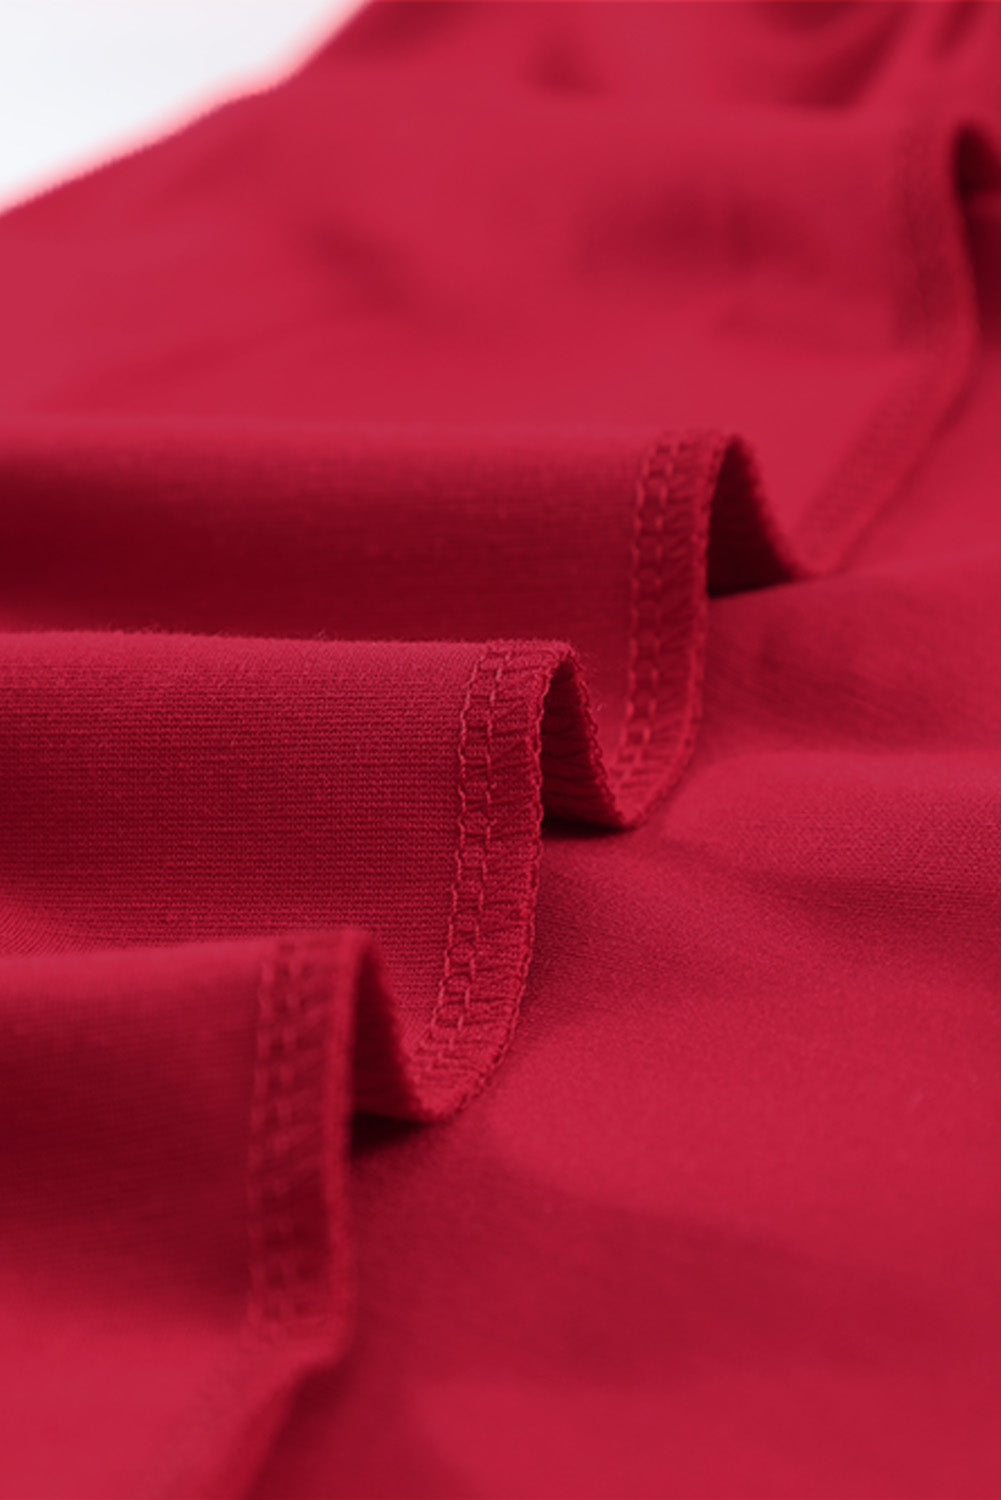 Red V Neck Ruffled Sleeve Empire Waist Flare Long Dress LC617472-3